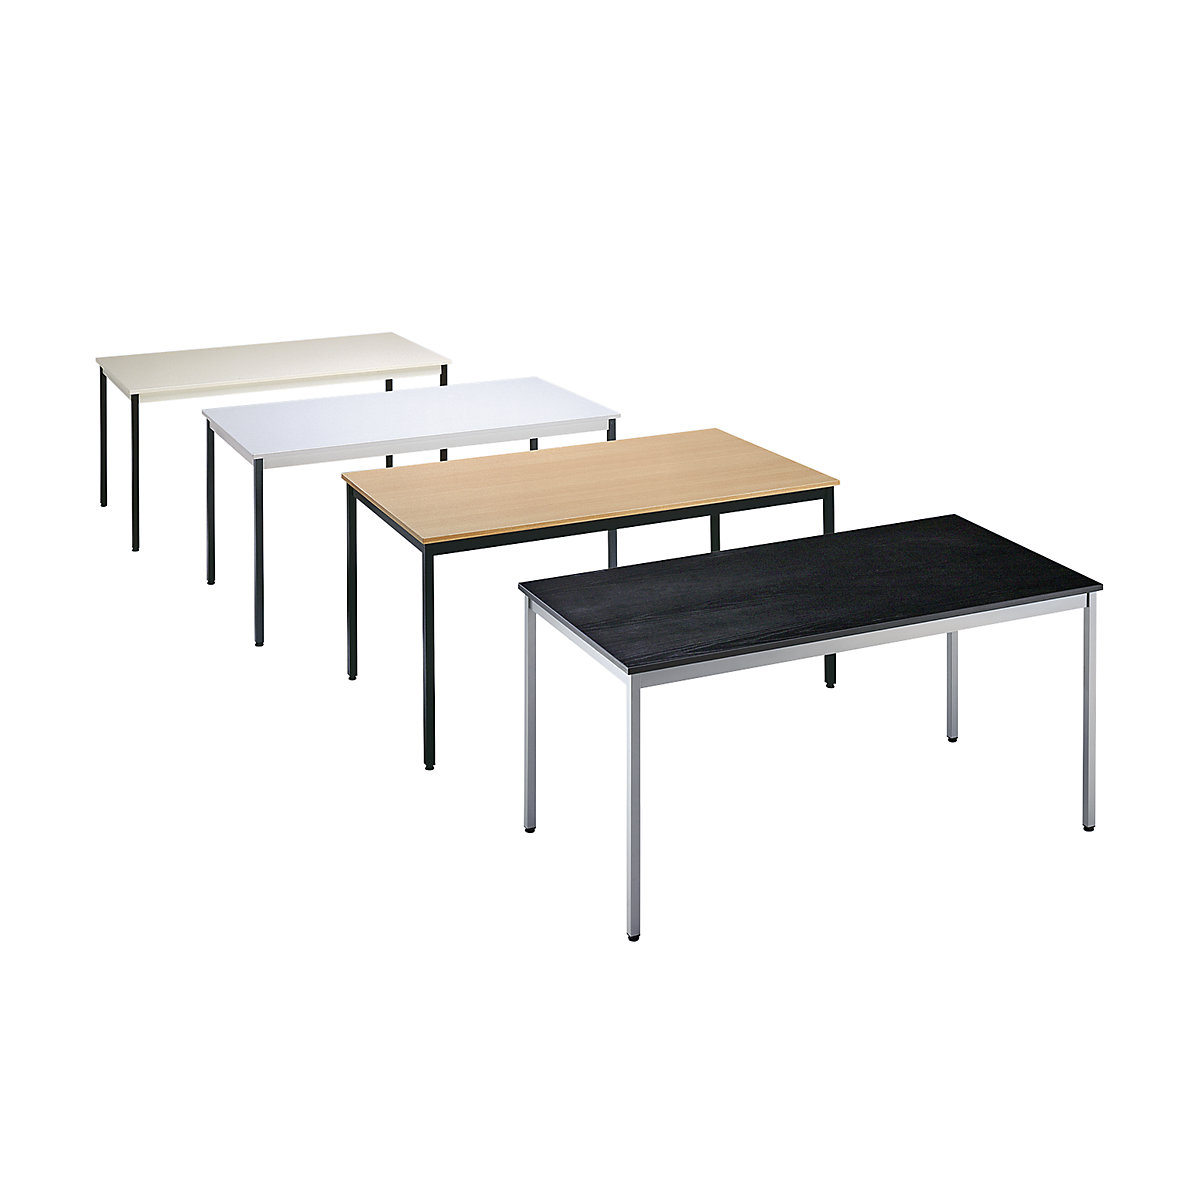 Universele tafel – eurokraft basic, rechthoekig, h x b x d = 740 x 1600 x 800 mm, blad ahornhoutdecor, frame blank aluminiumkleurig-1